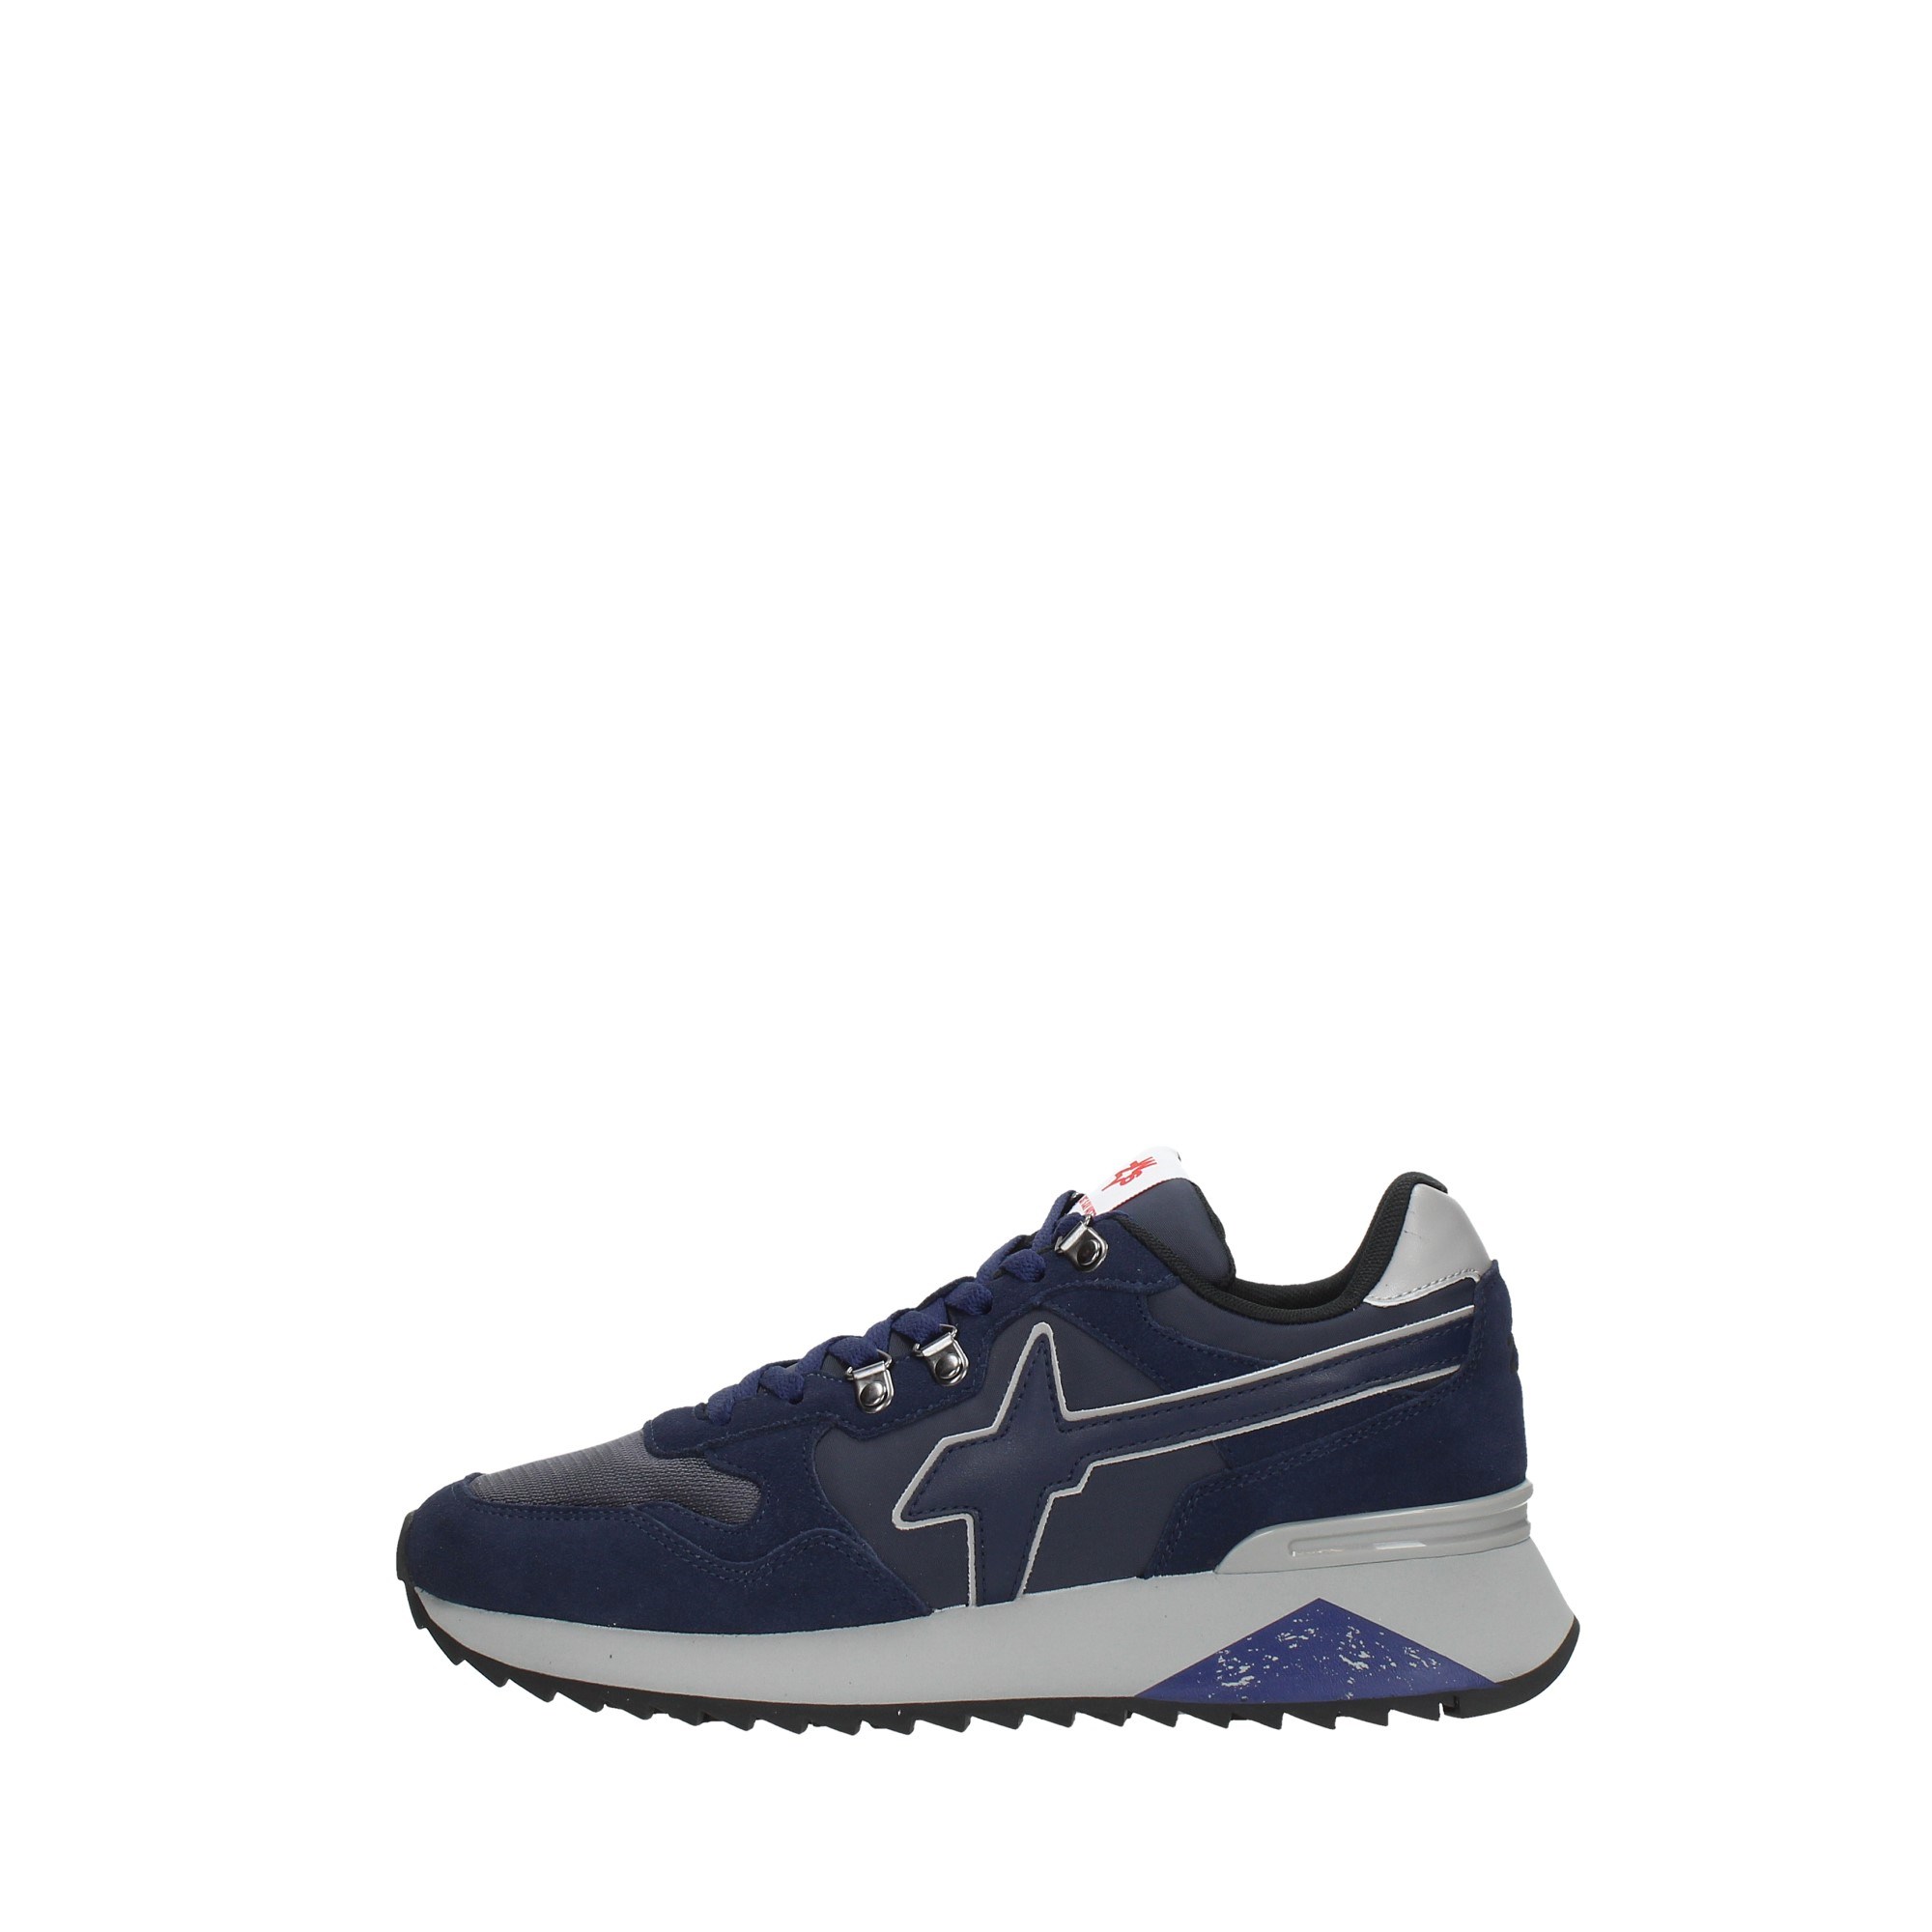 W6yz Shoes Man Sneakers YAK-M 0C02